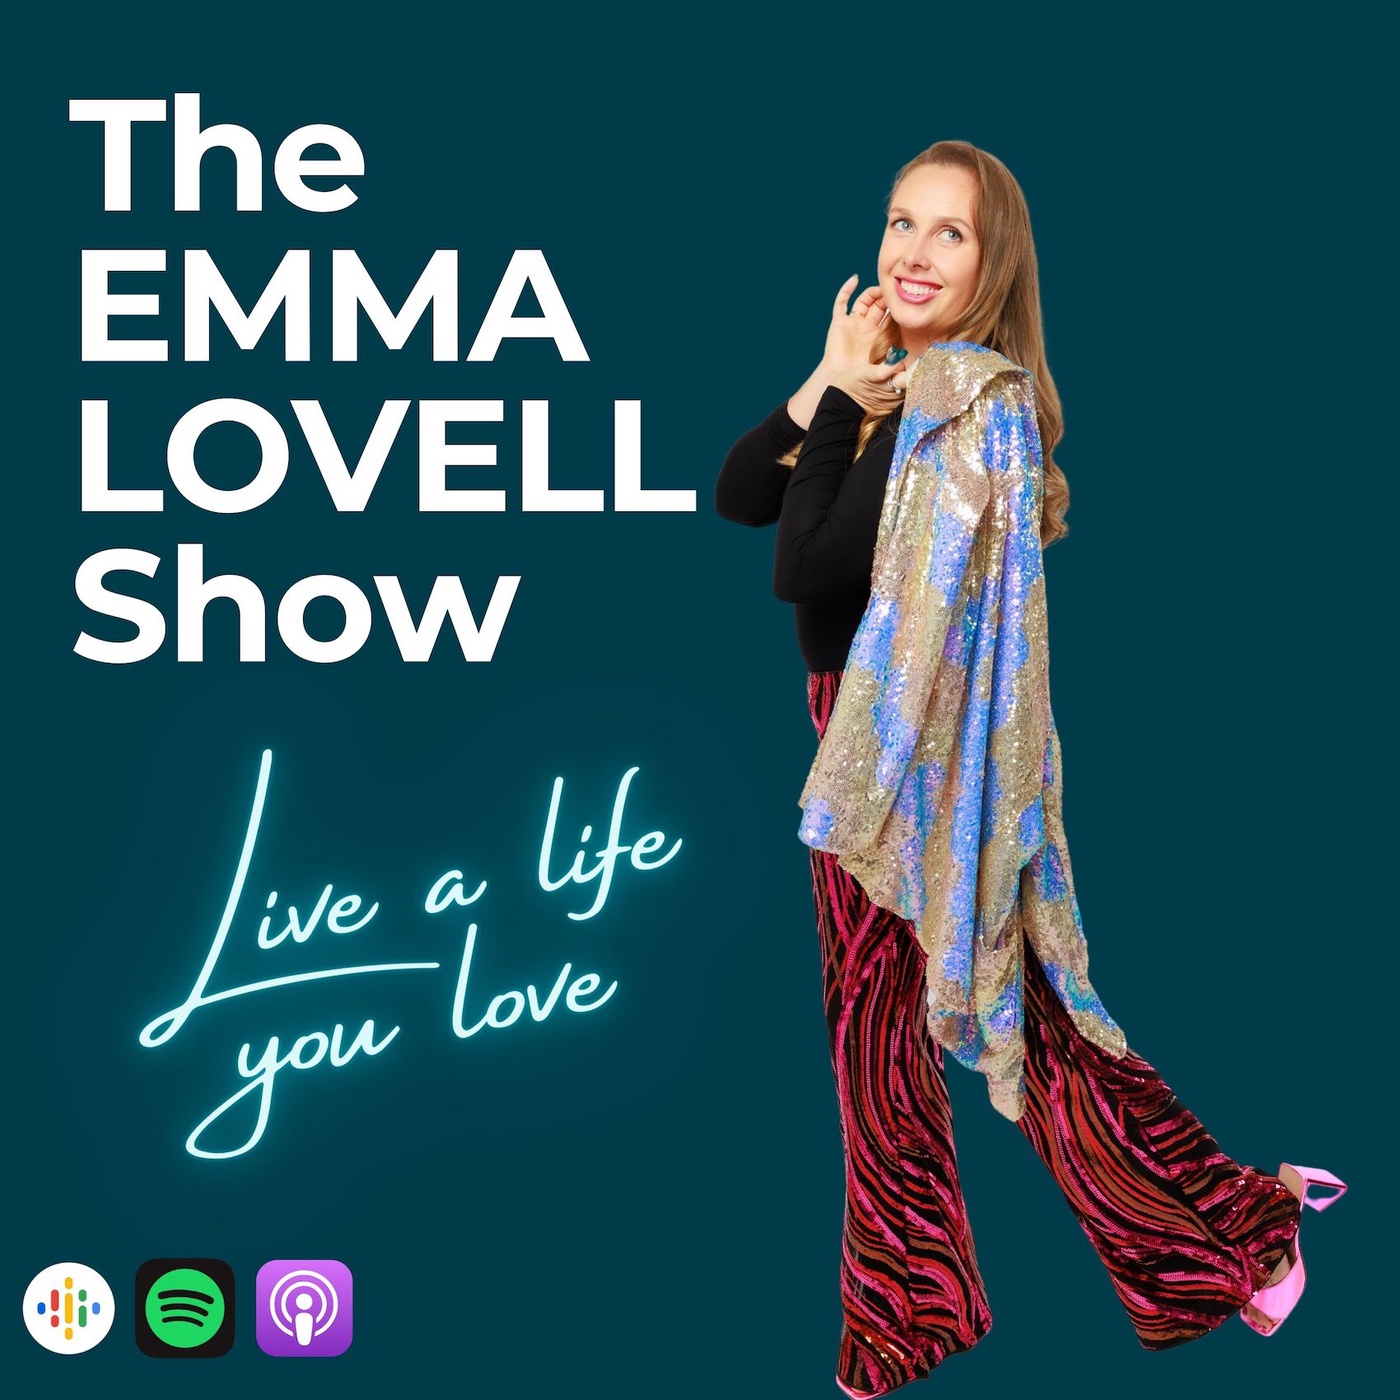 The EMMA LOVELL Show